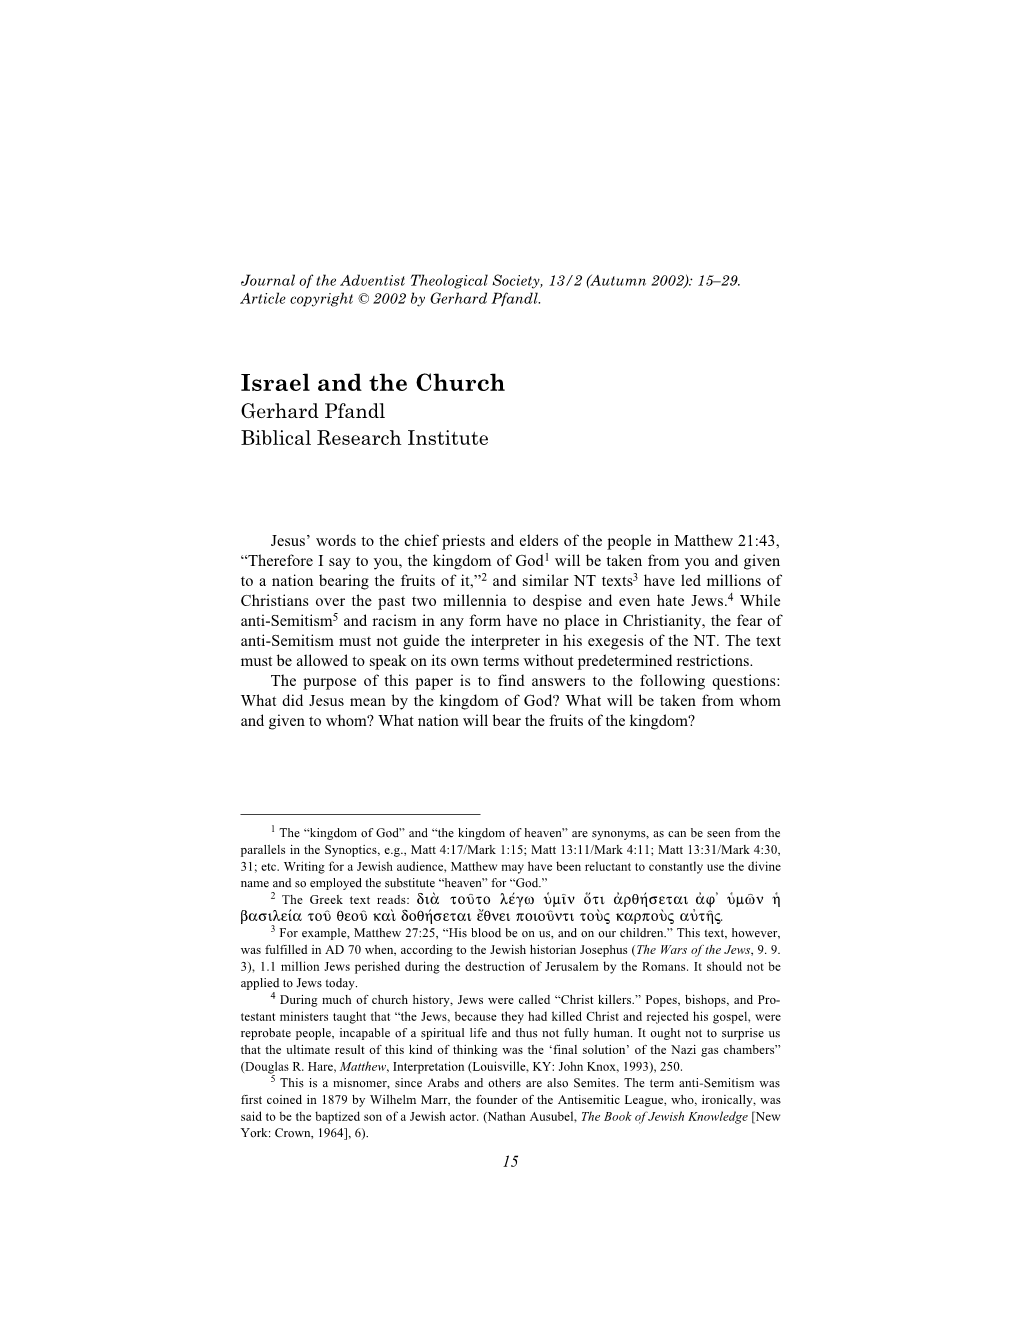 Israel and the Church Gerhard Pfandl Biblical Research Institute